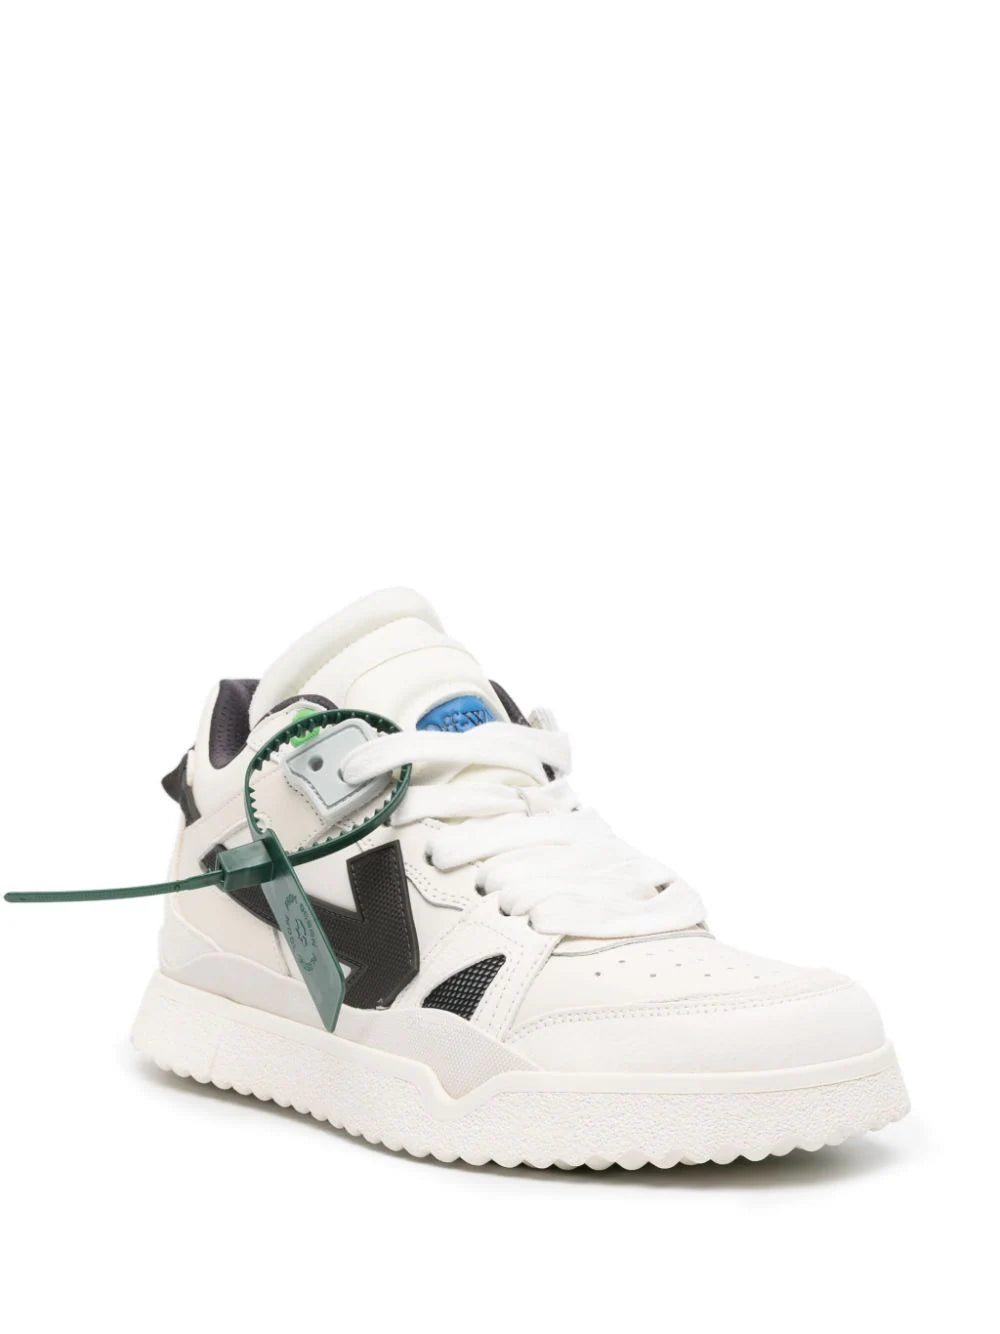 OFF-WHITE MEN Midtop Sponge Sneakers White/Black - MAISONDEFASHION.COM